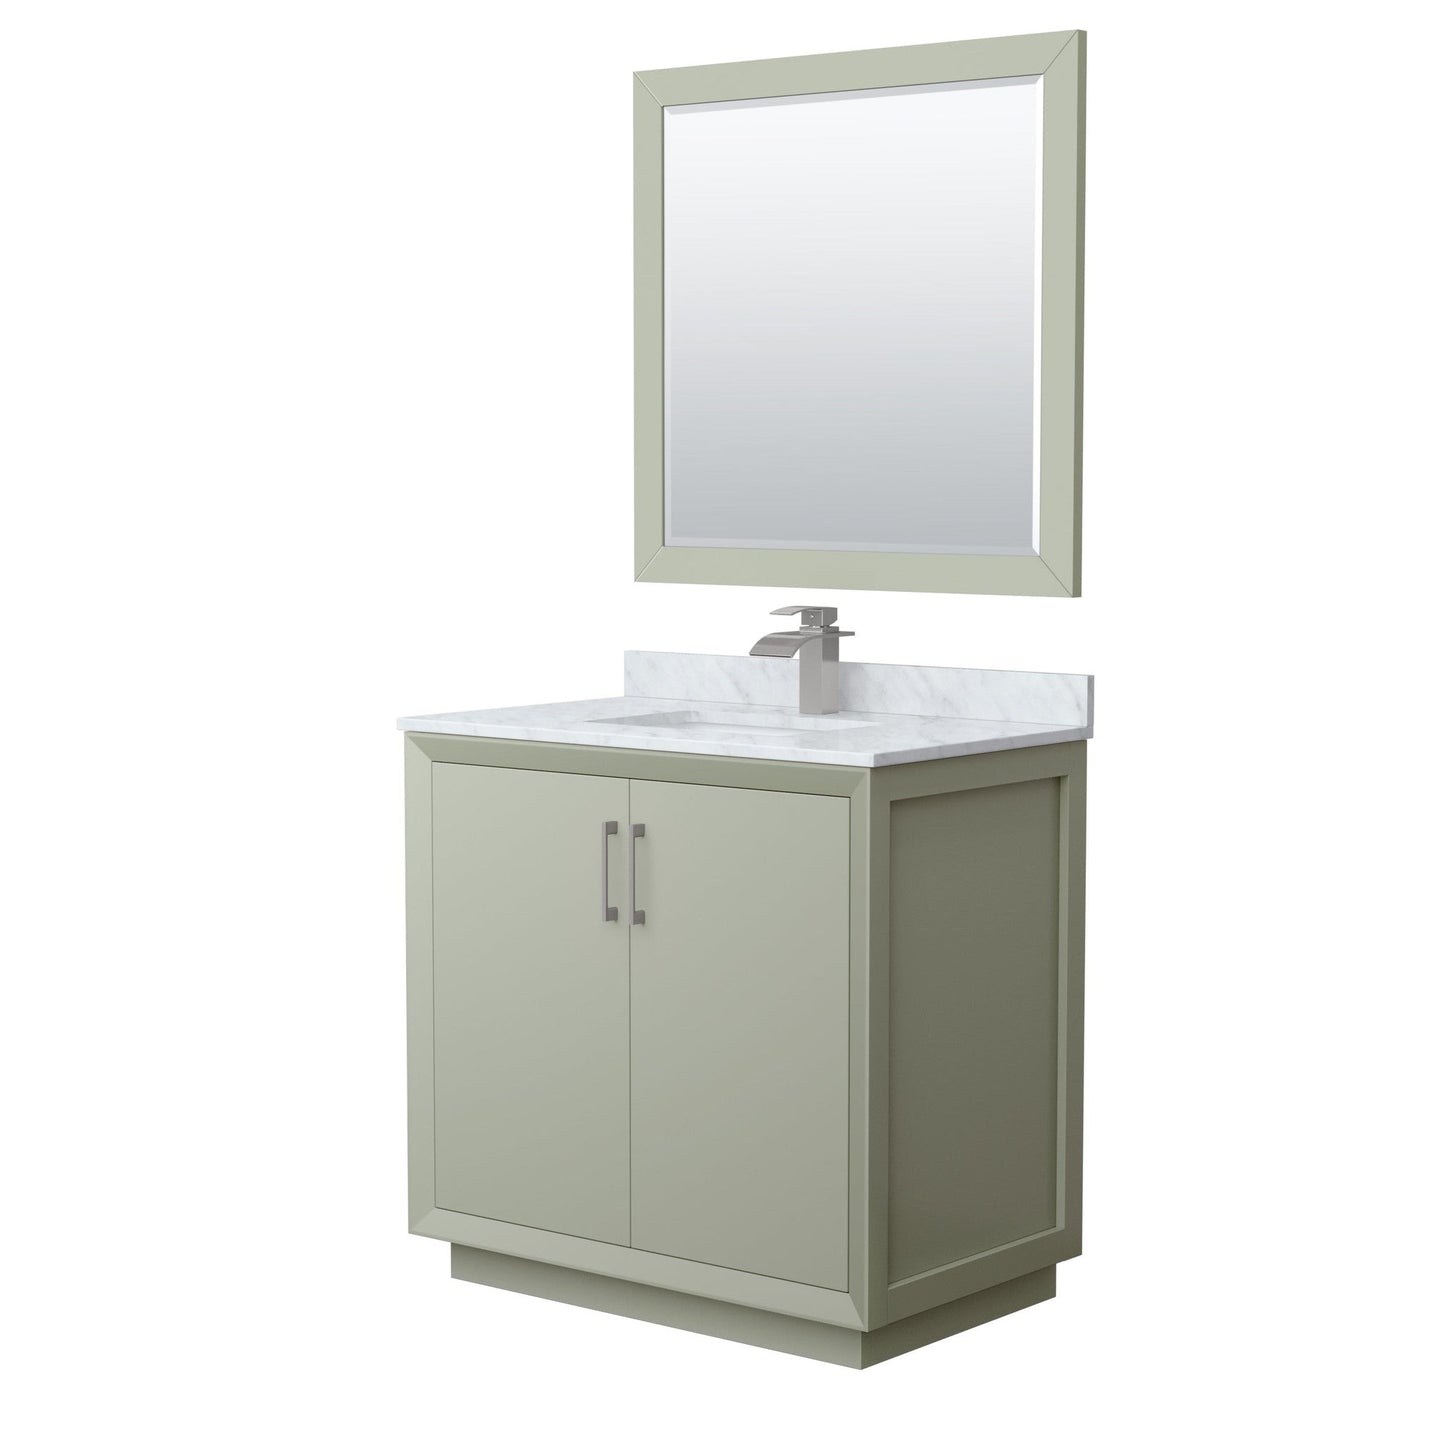 Wyndham Collection Strada 36" Single Bathroom Vanity in Light Green, White Carrara Marble Countertop, Undermount Square Sink, Brushed Nickel Trim, 34" Mirror